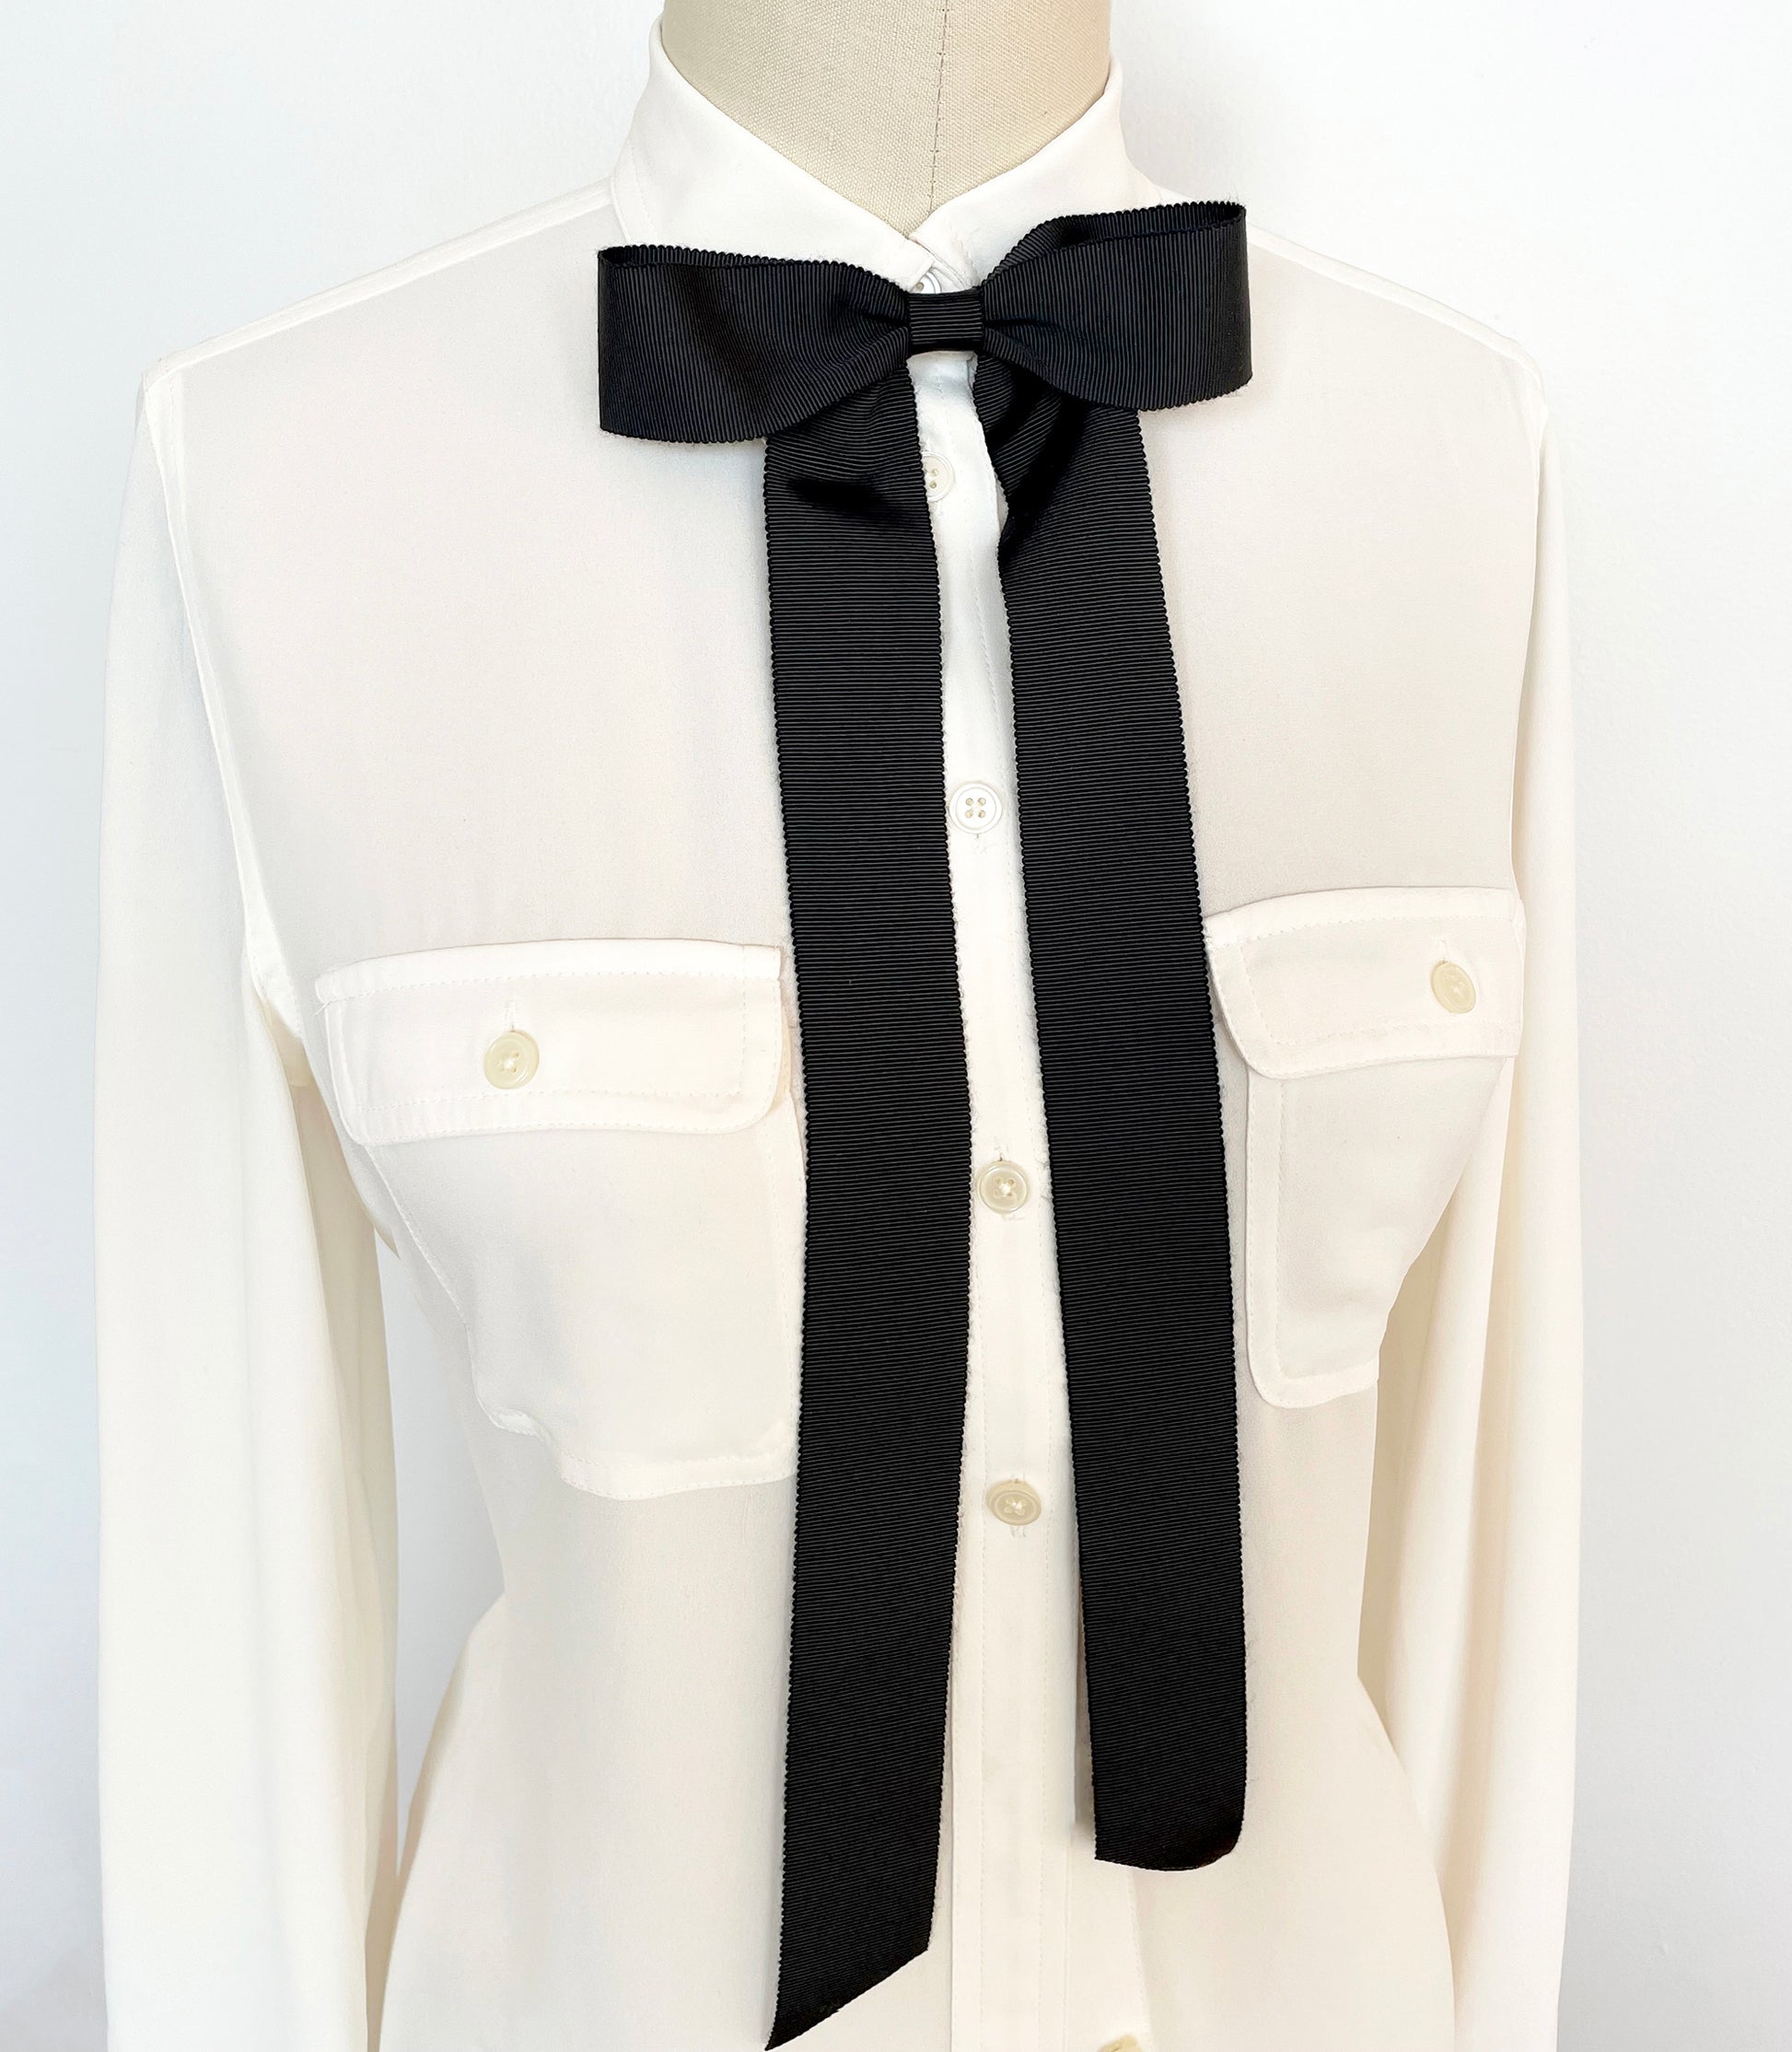 Black ribbon neckwear bow tie for men and women